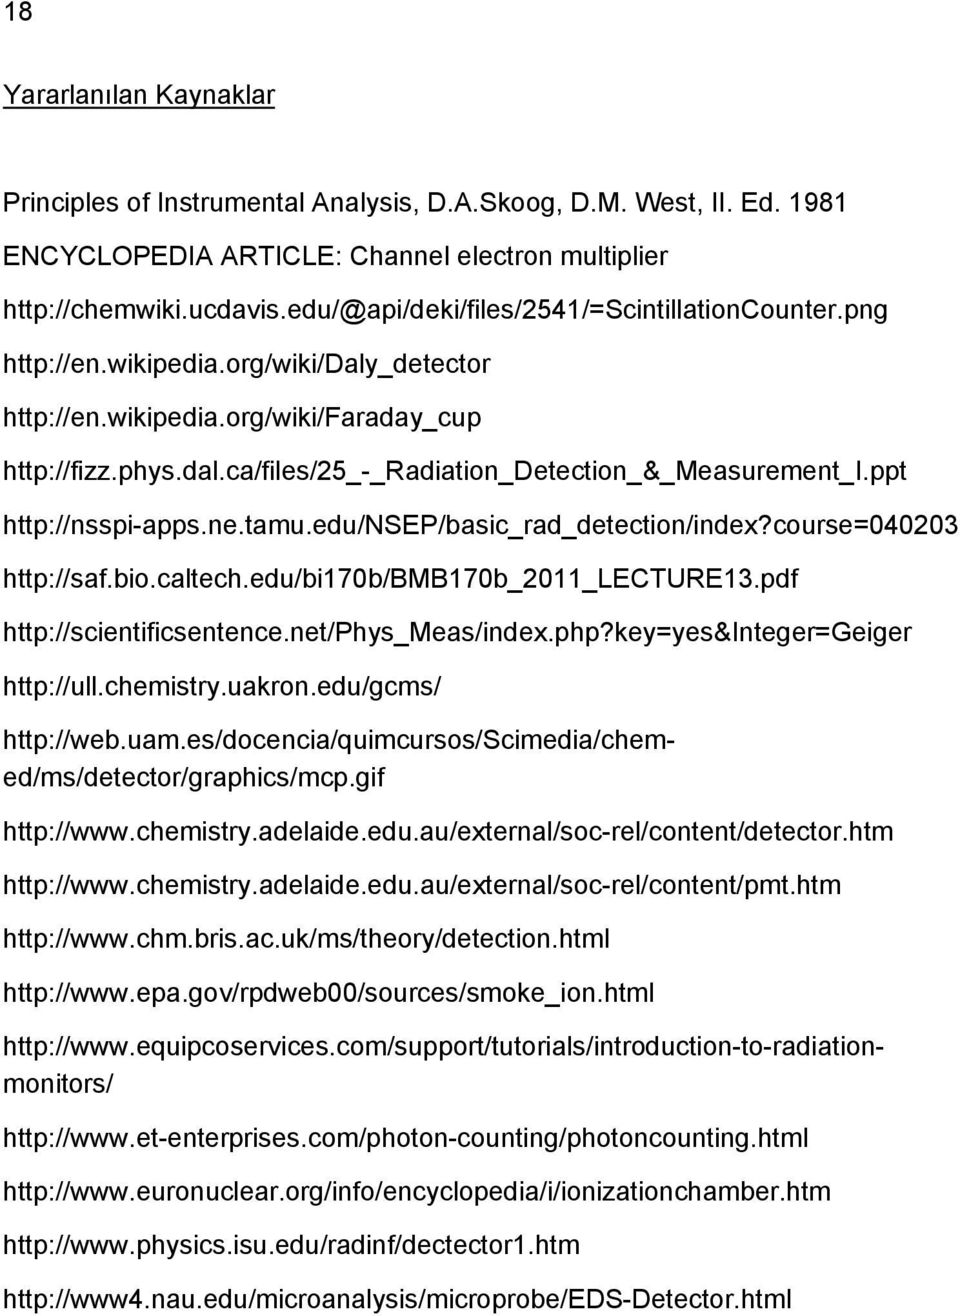 ppt http://nsspi-apps.ne.tamu.edu/nsep/basic_rad_detection/index?course=040203 http://saf.bio.caltech.edu/bi170b/bmb170b_2011_lecture13.pdf http://scientificsentence.net/phys_meas/index.php?